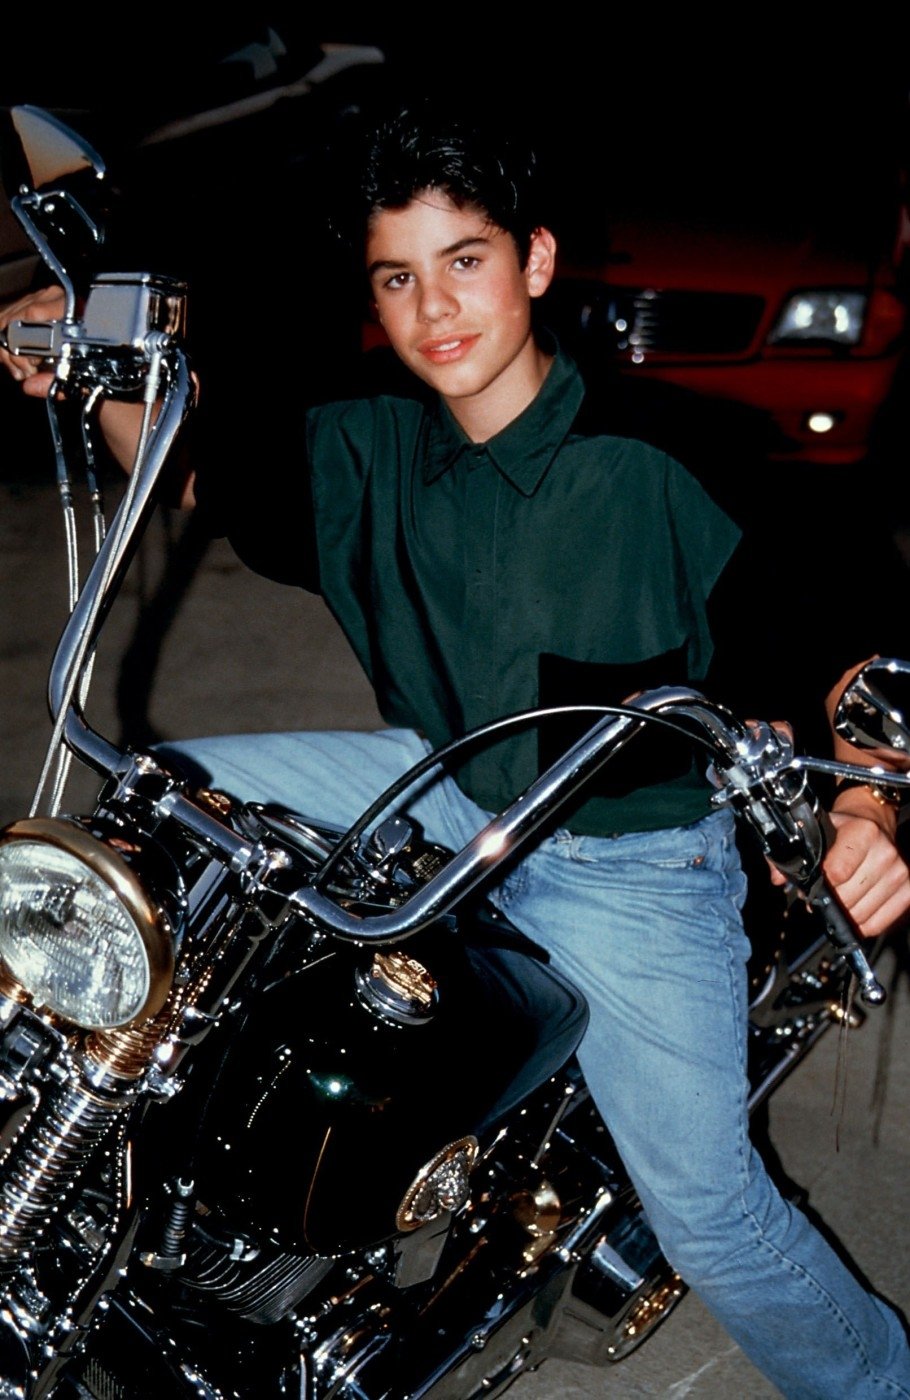 Rocky junior, tedy Sage Stallone, za mlada na motorce